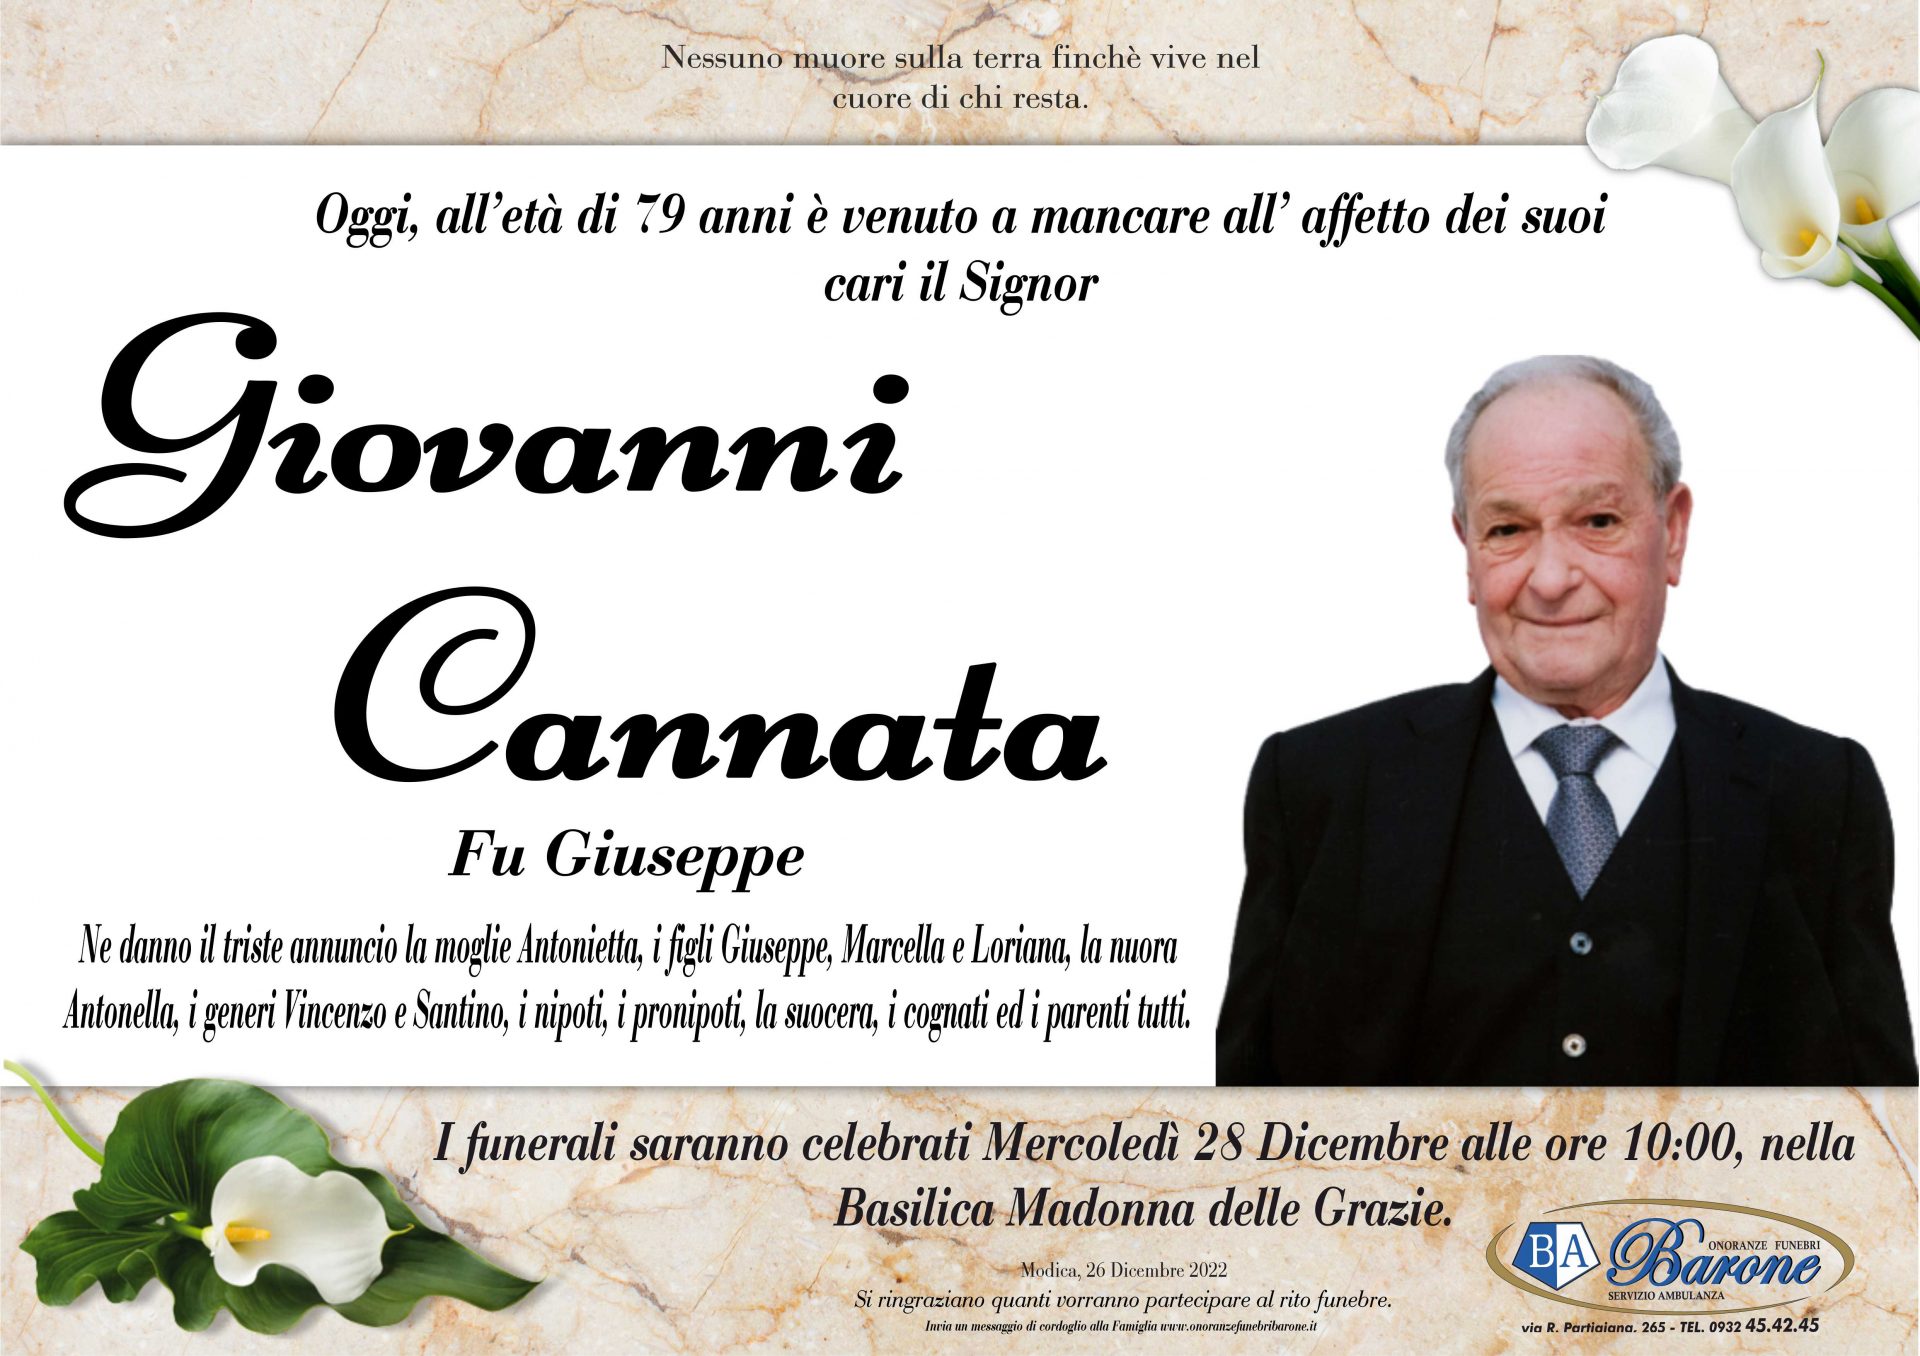 Giovanni Cannata